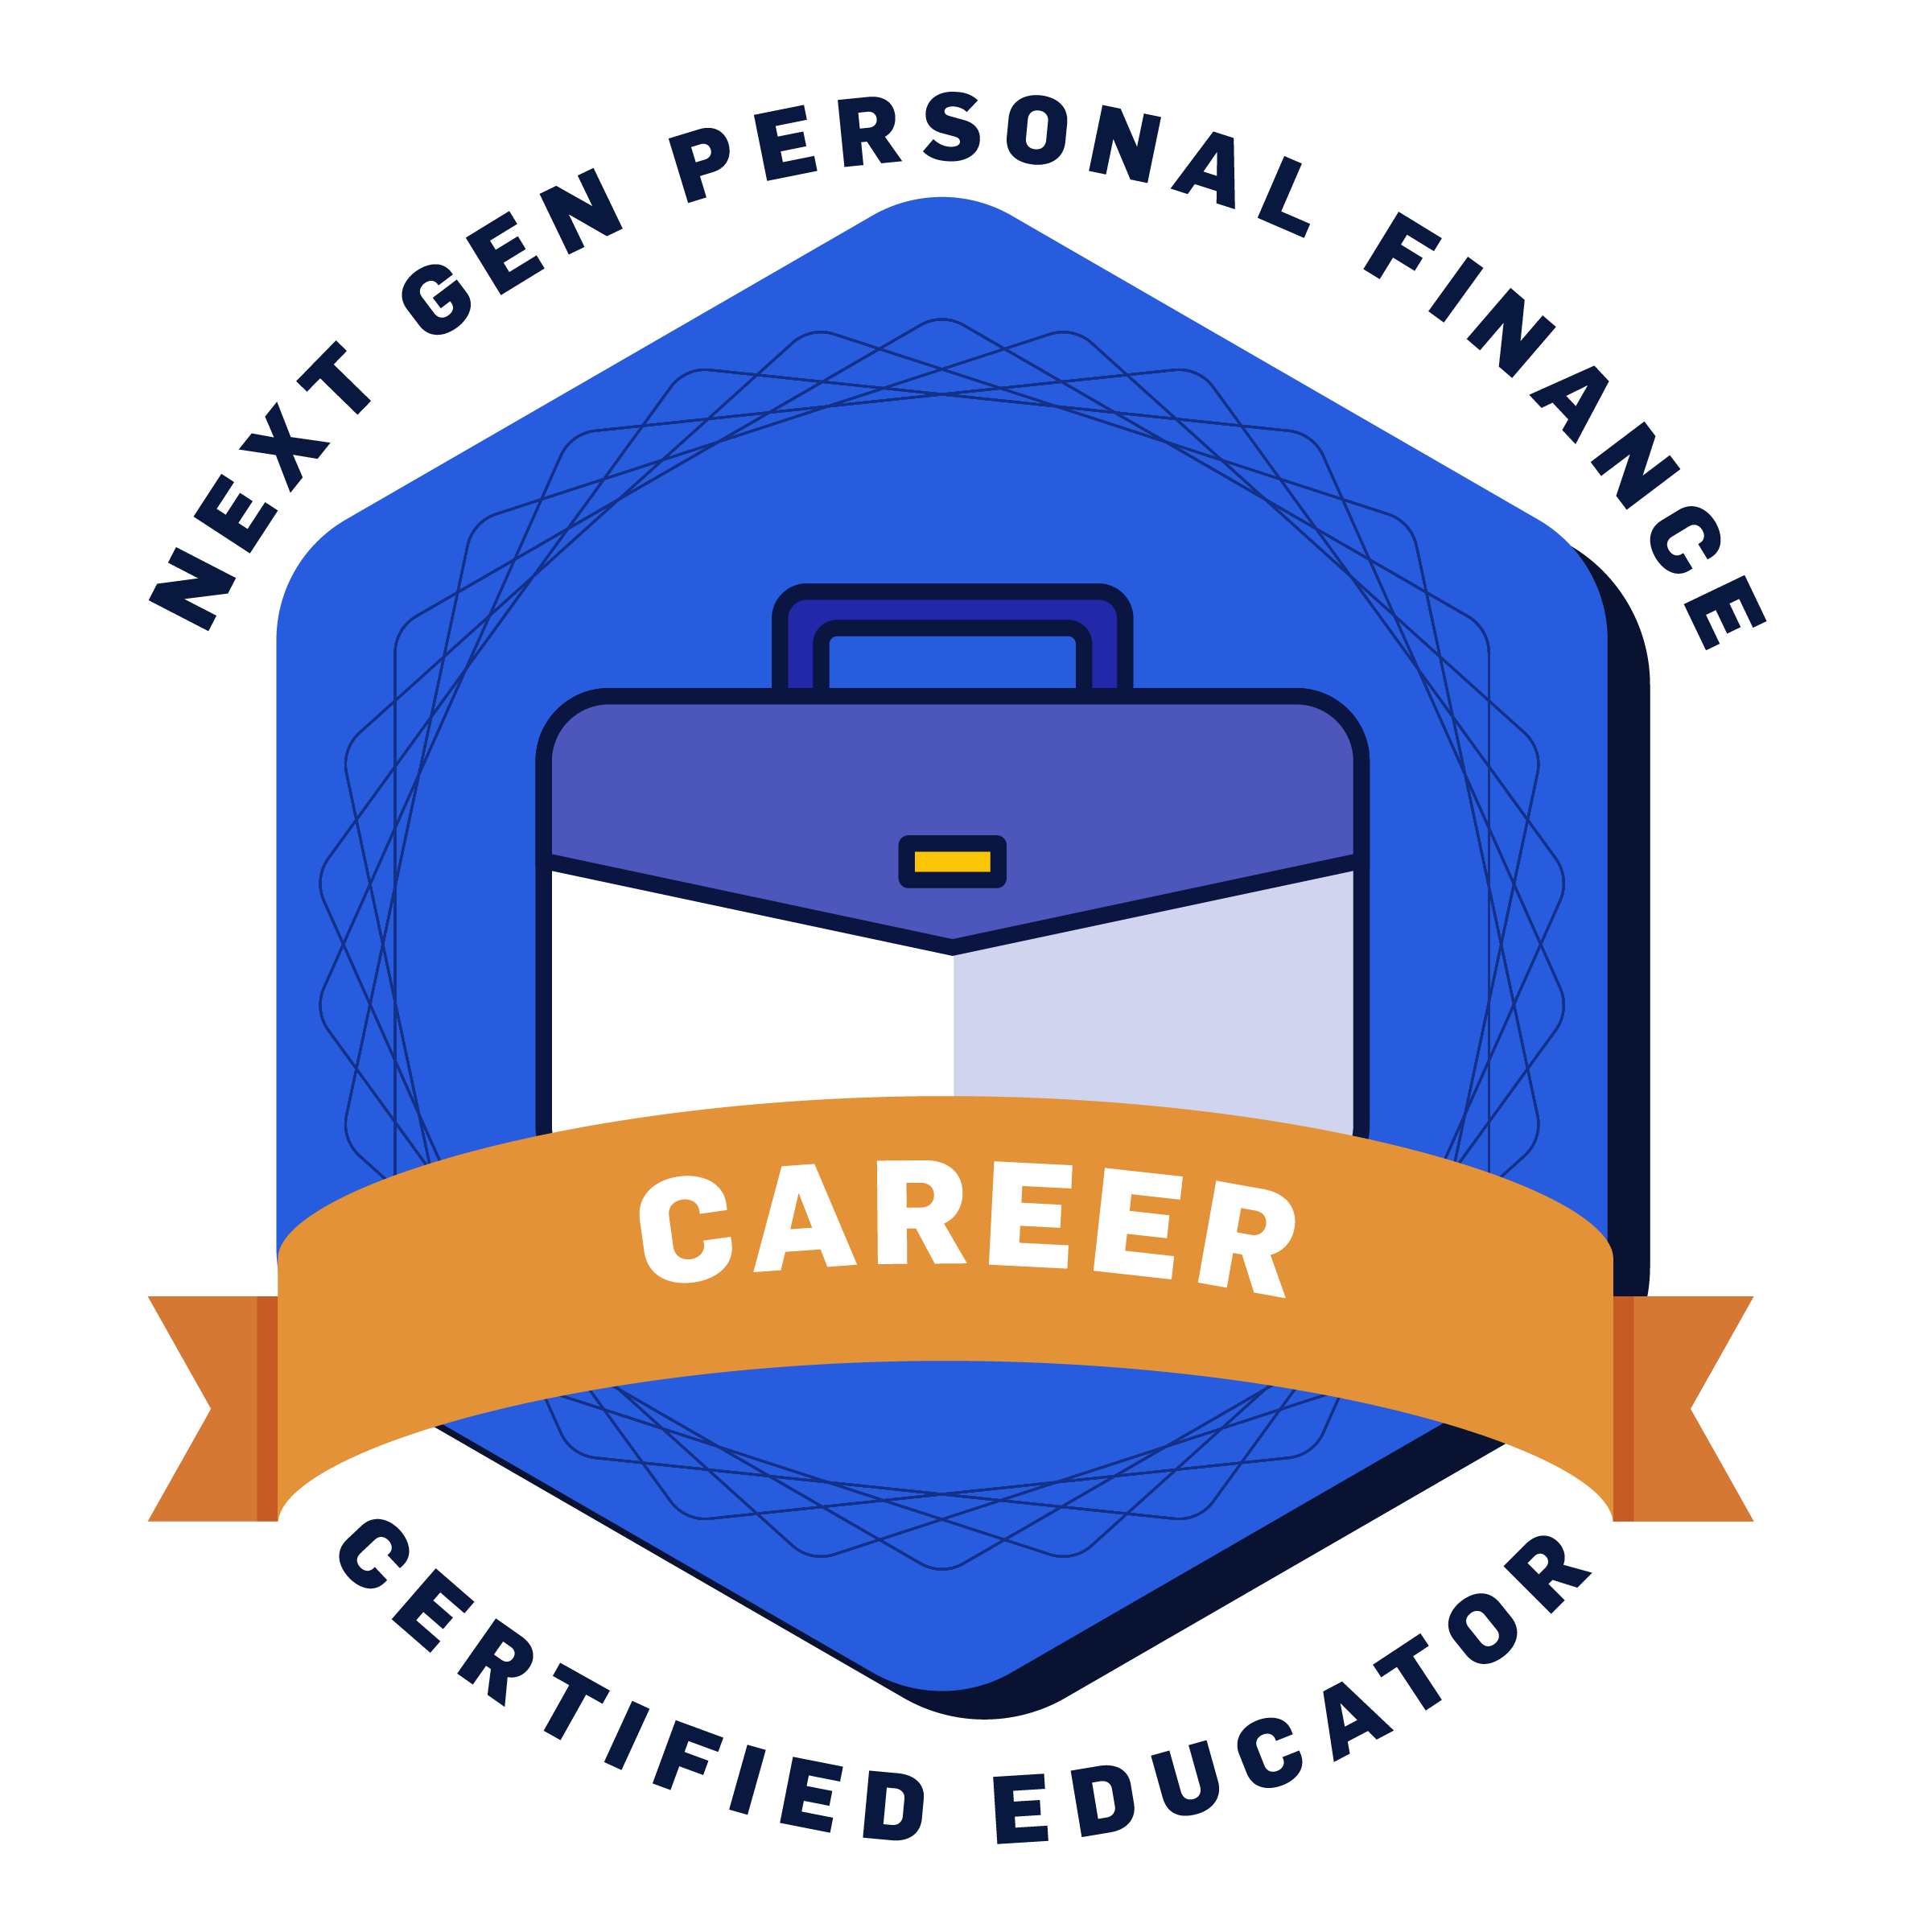 Career Certification Badge